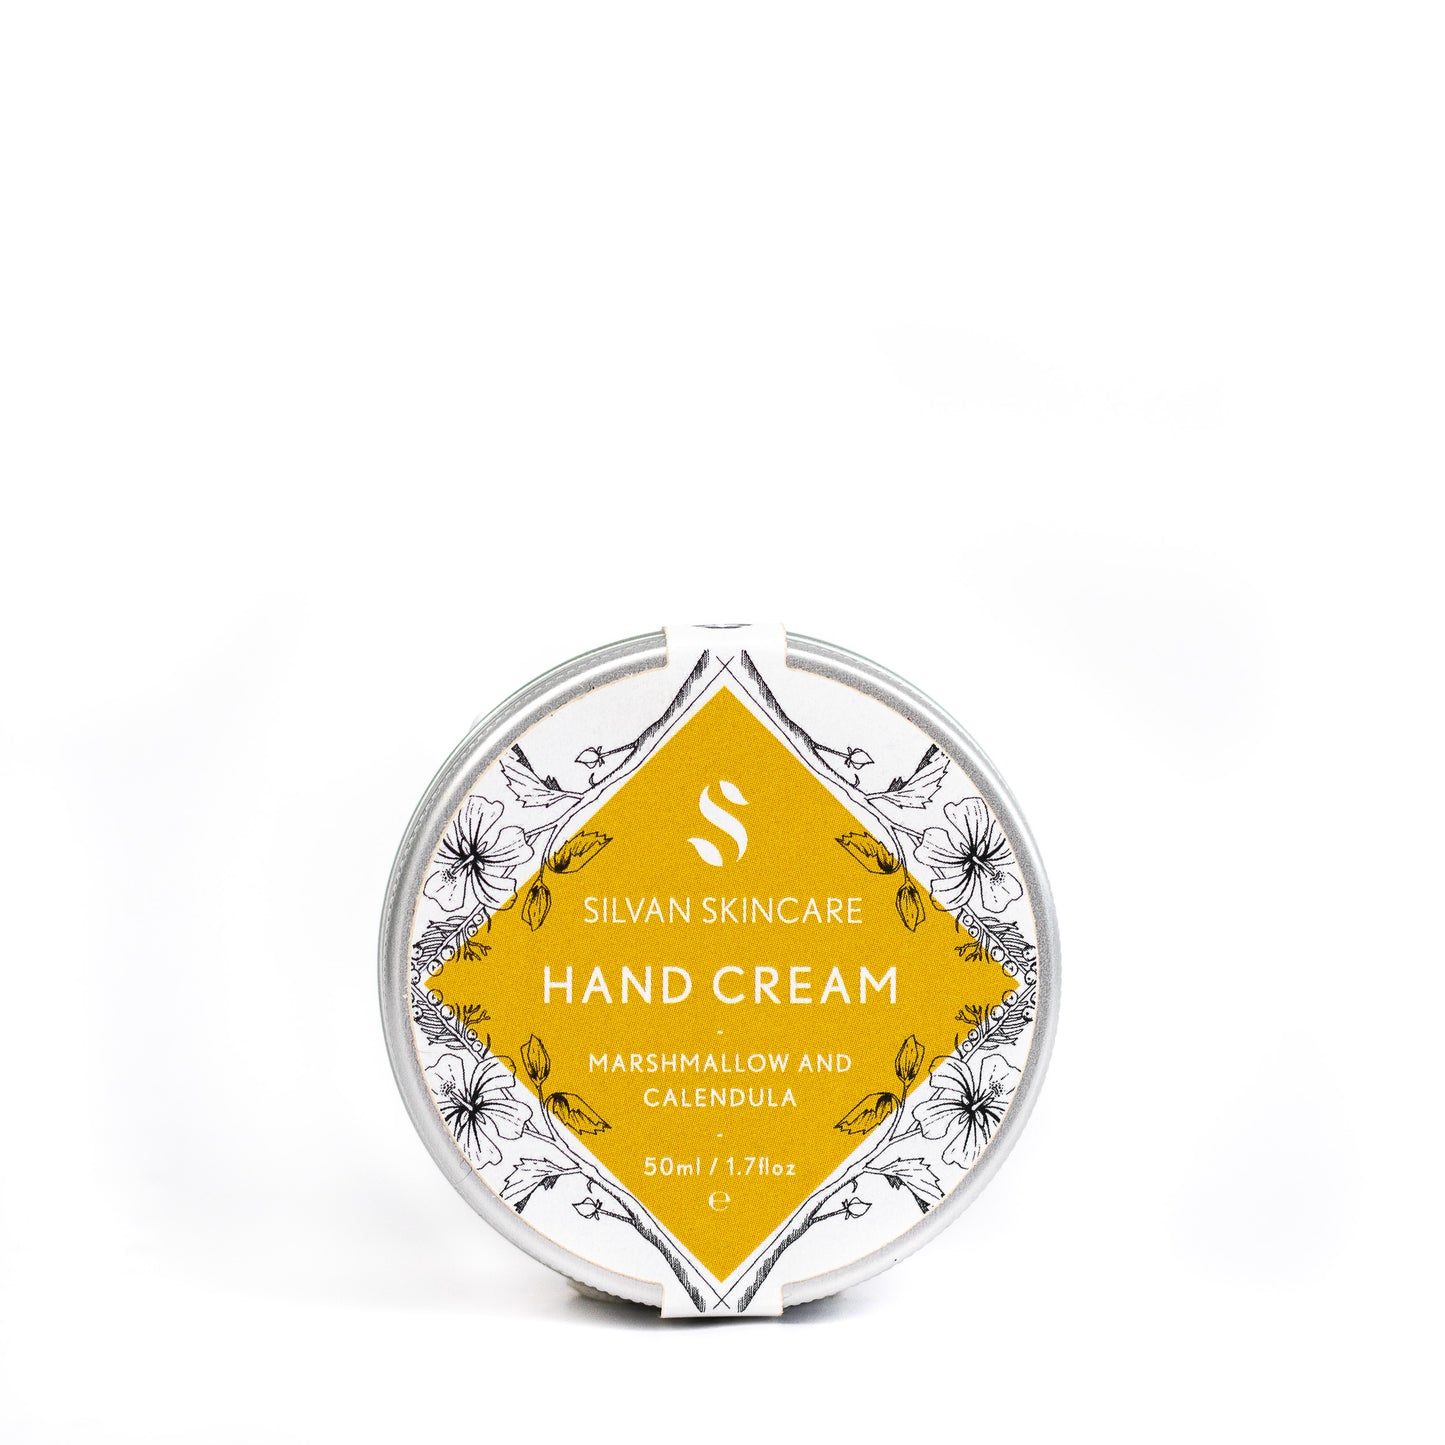 Hand Cream with Marshmallow and Calendula